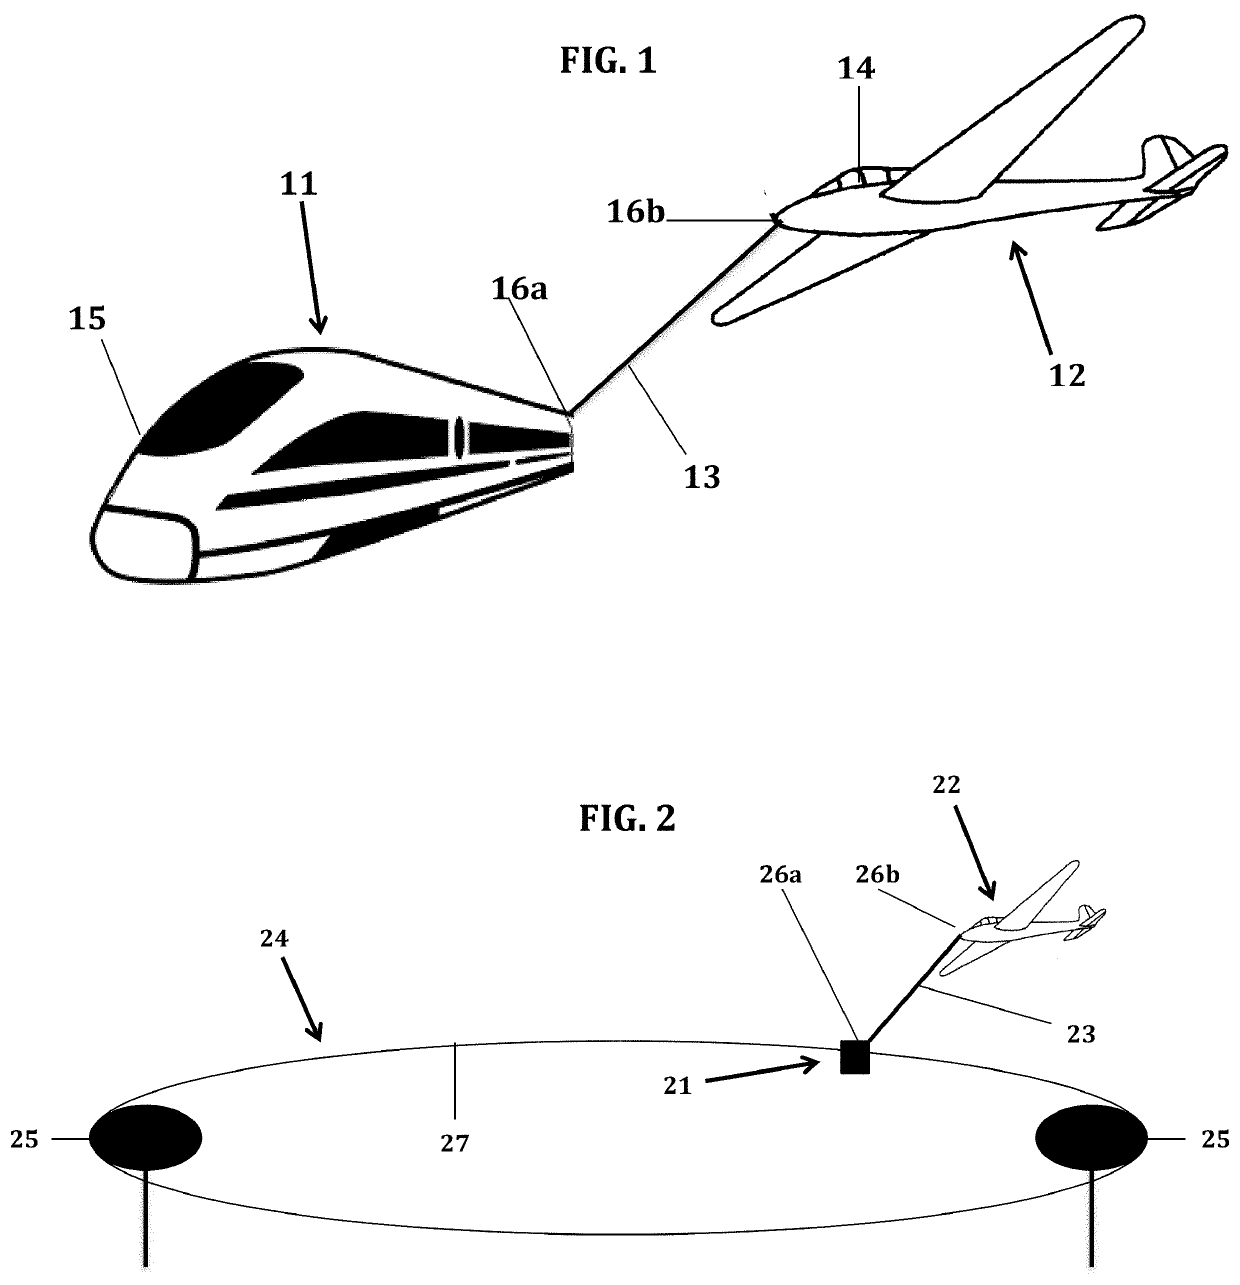 Hybrid air transportation